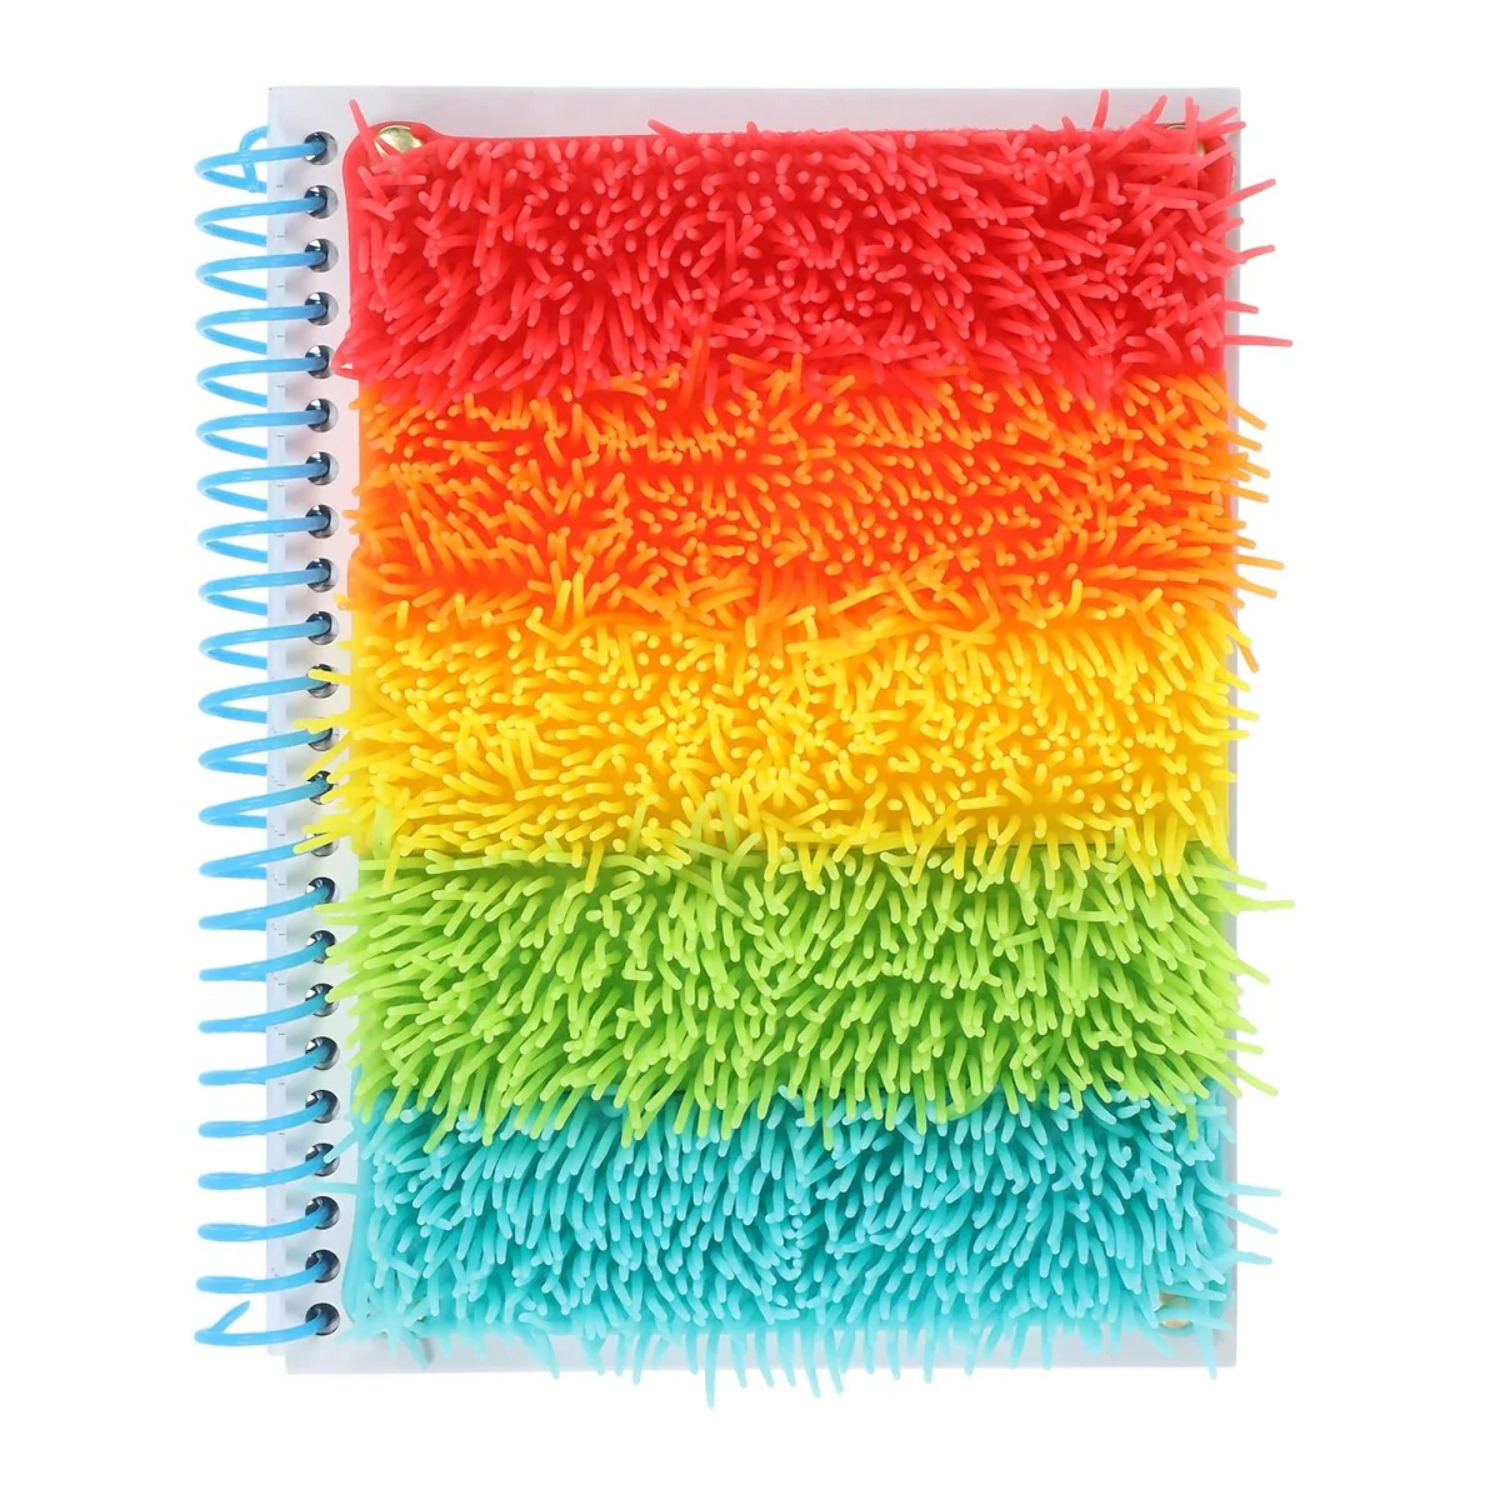 Zegsy rainbow sensory journal - image 1 of 5